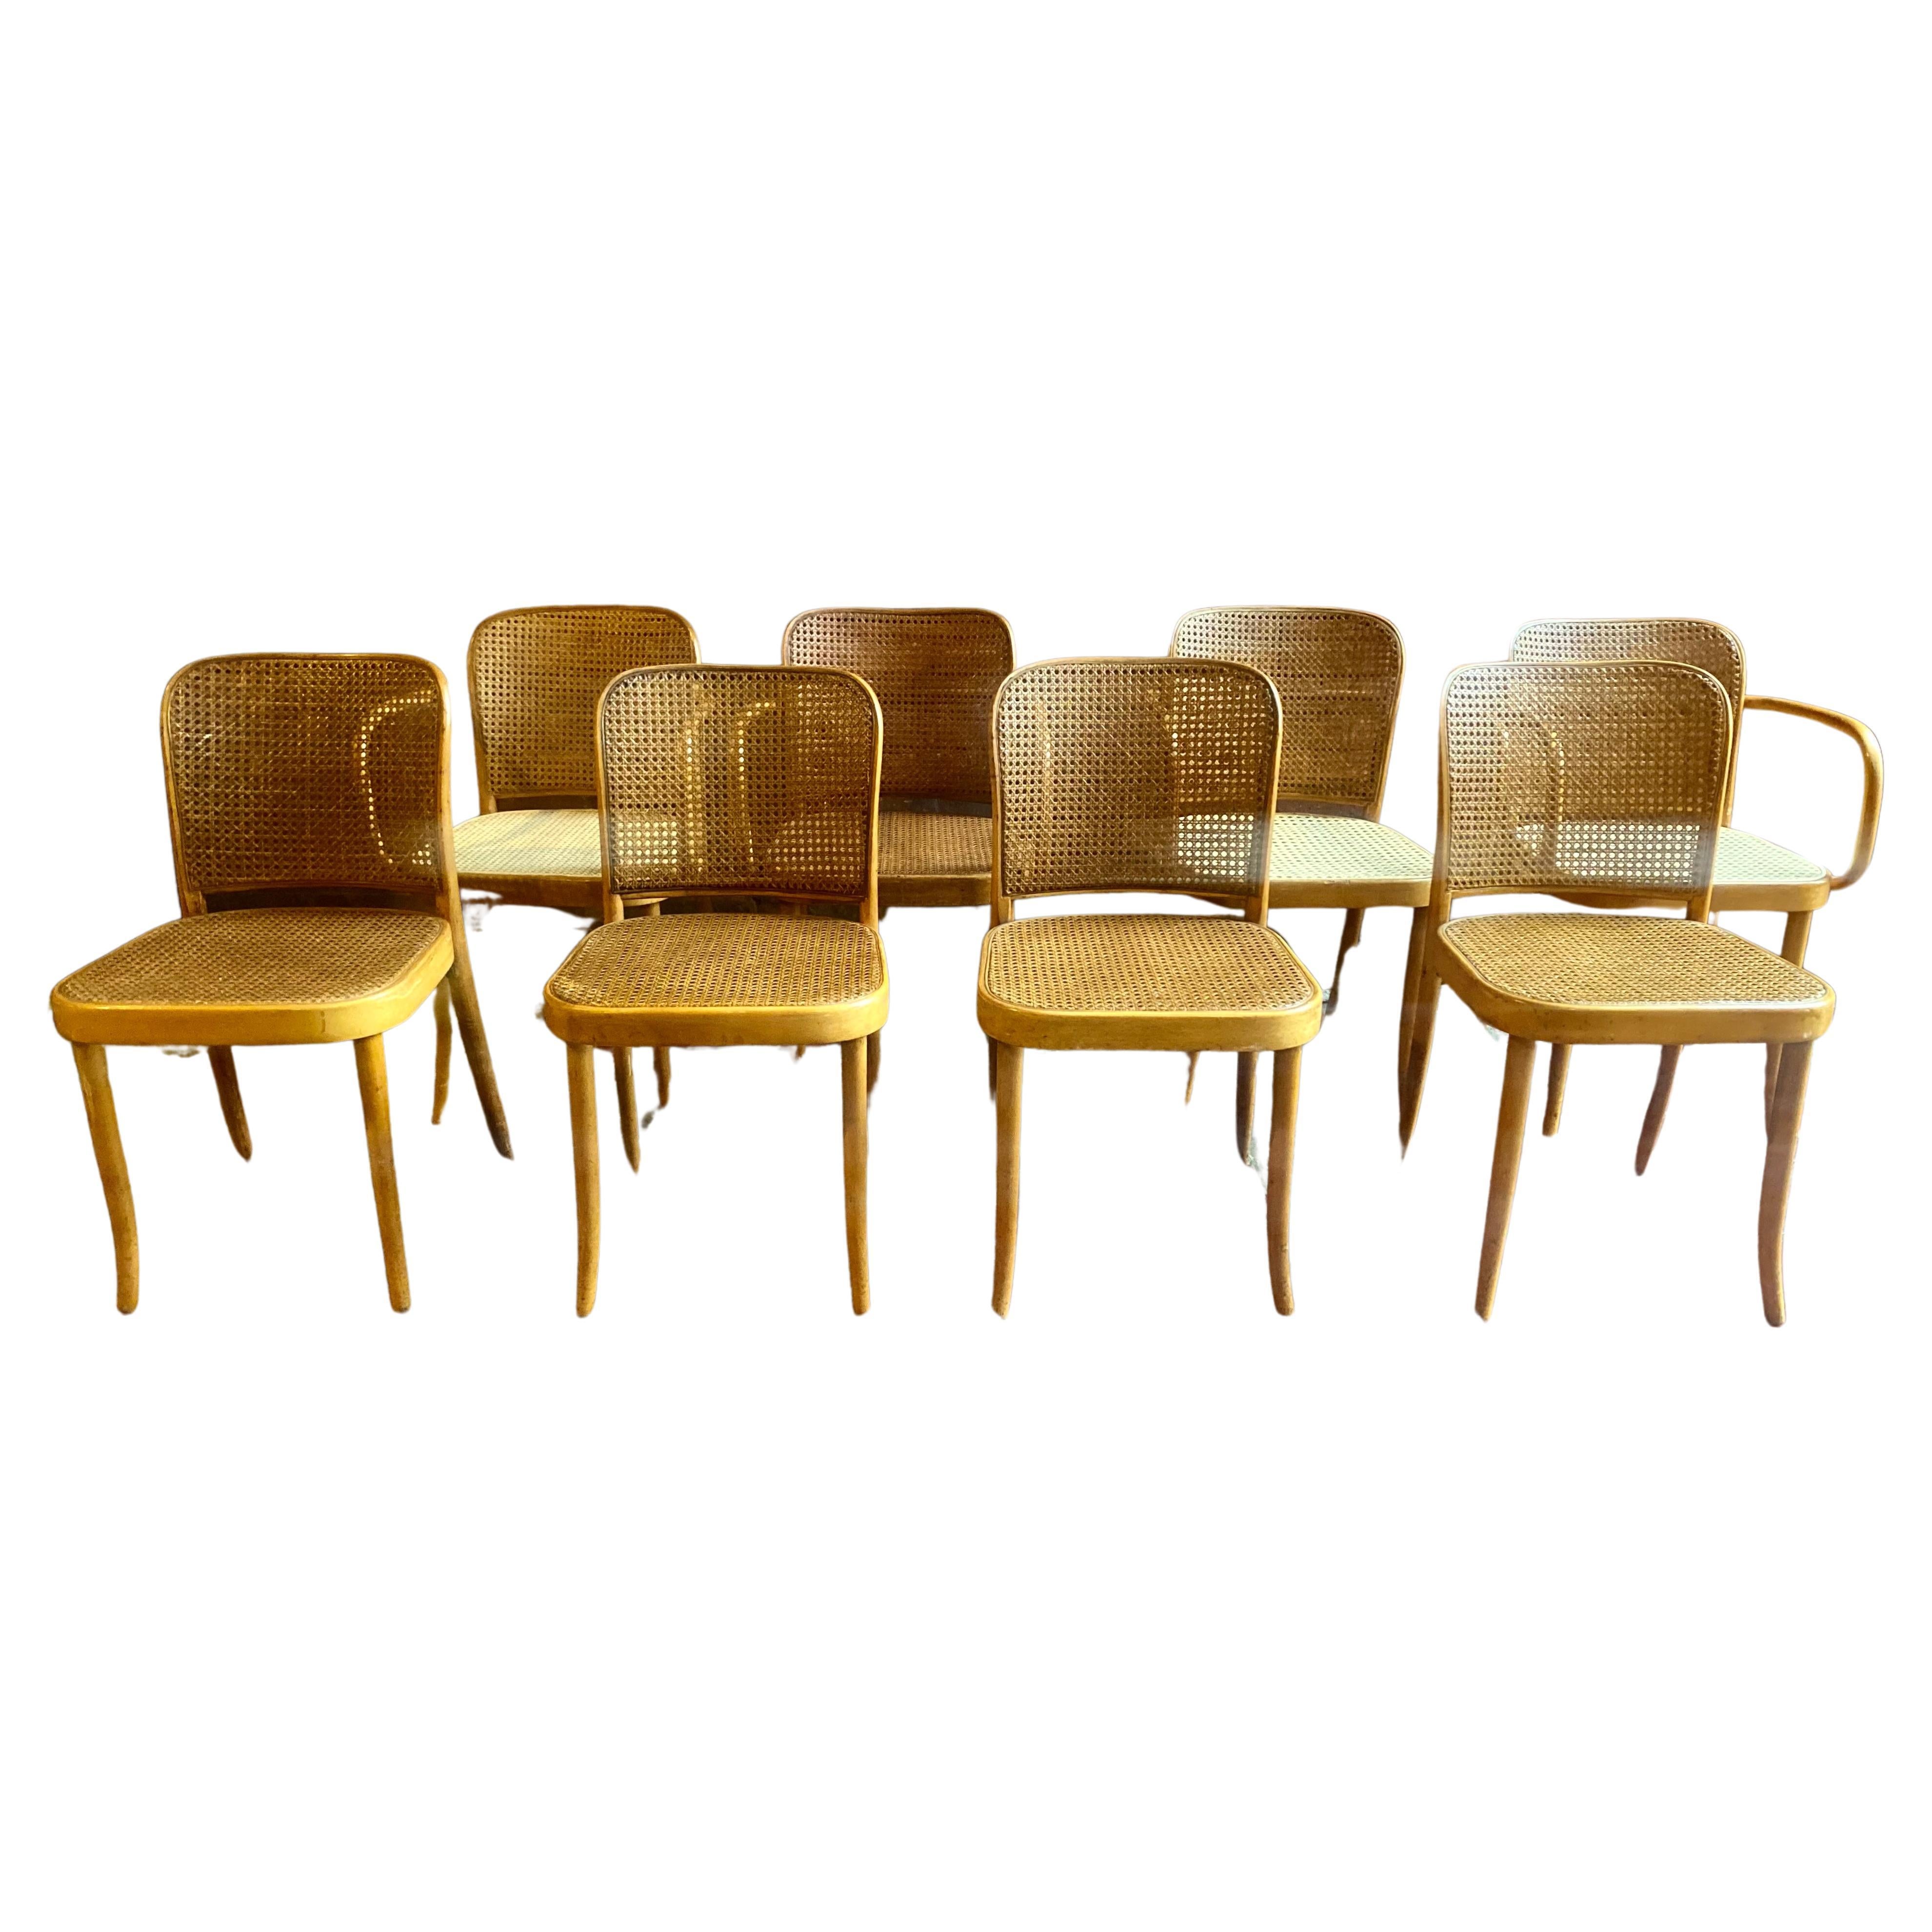 Set 8 Josef Hoffmann for Stendig Dining Chairs, Bentwood Prague Model 811